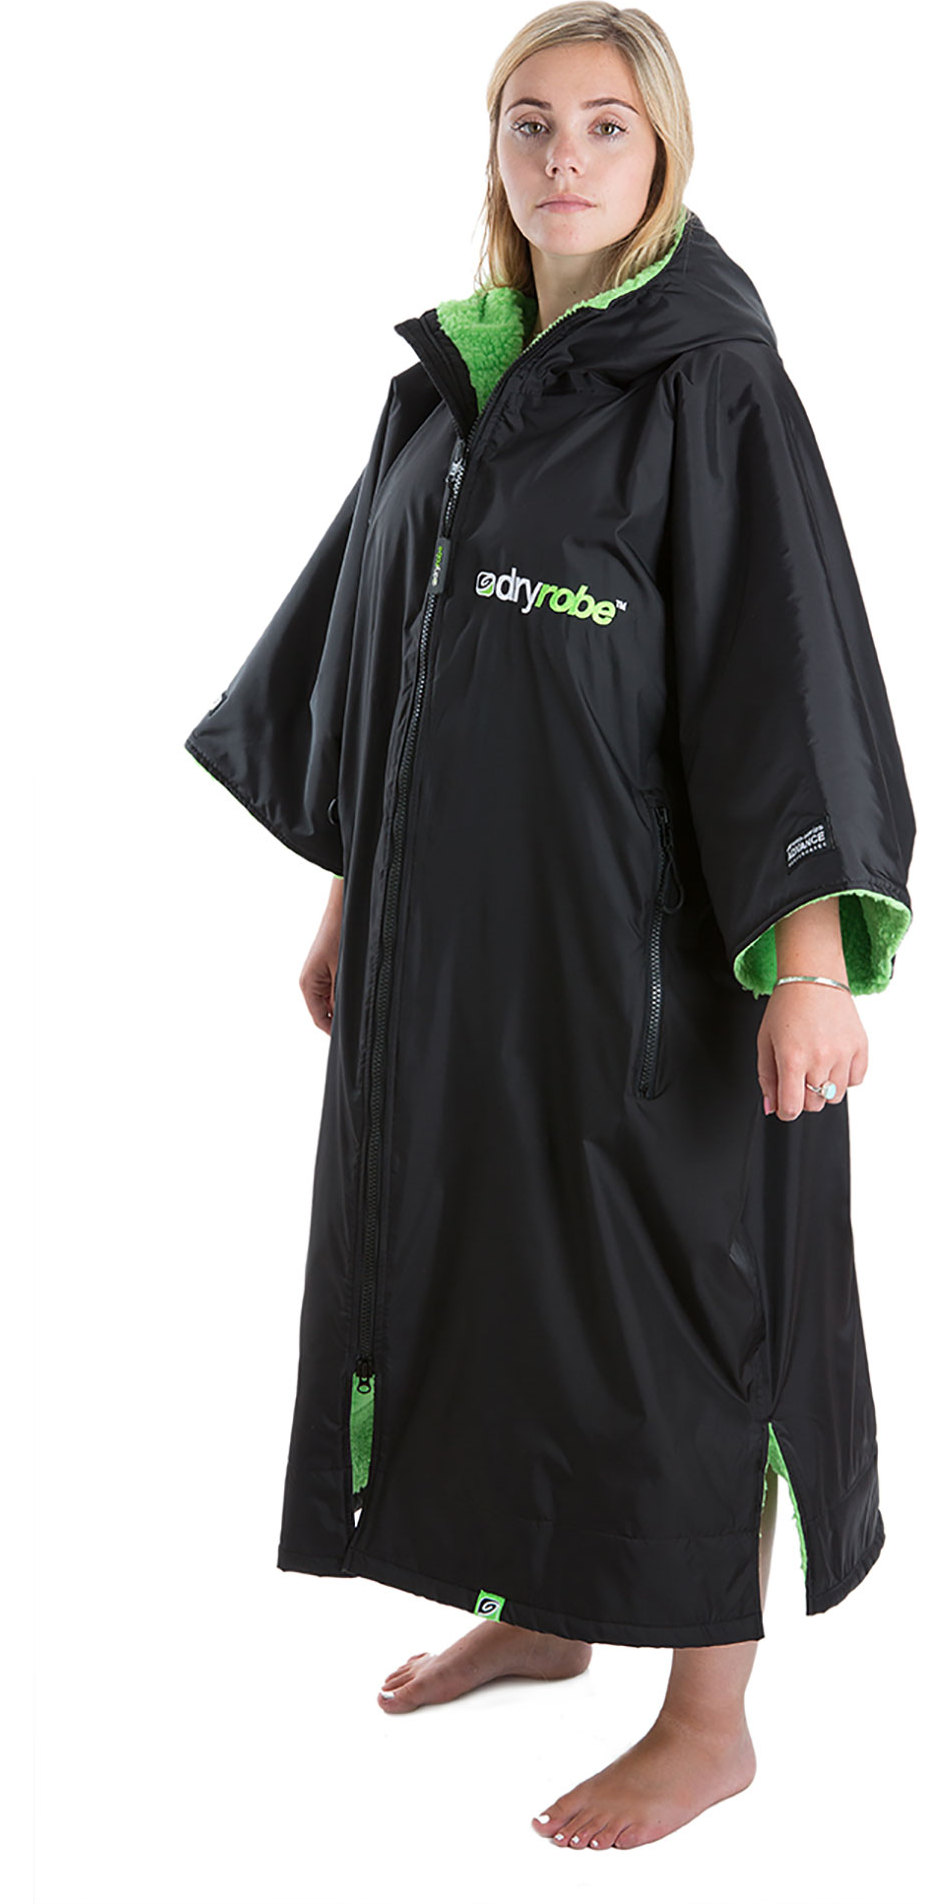 B 2020 Dryrobe Advance Short Sleeve Premium Outdoor Change Robe Poncho DR100 